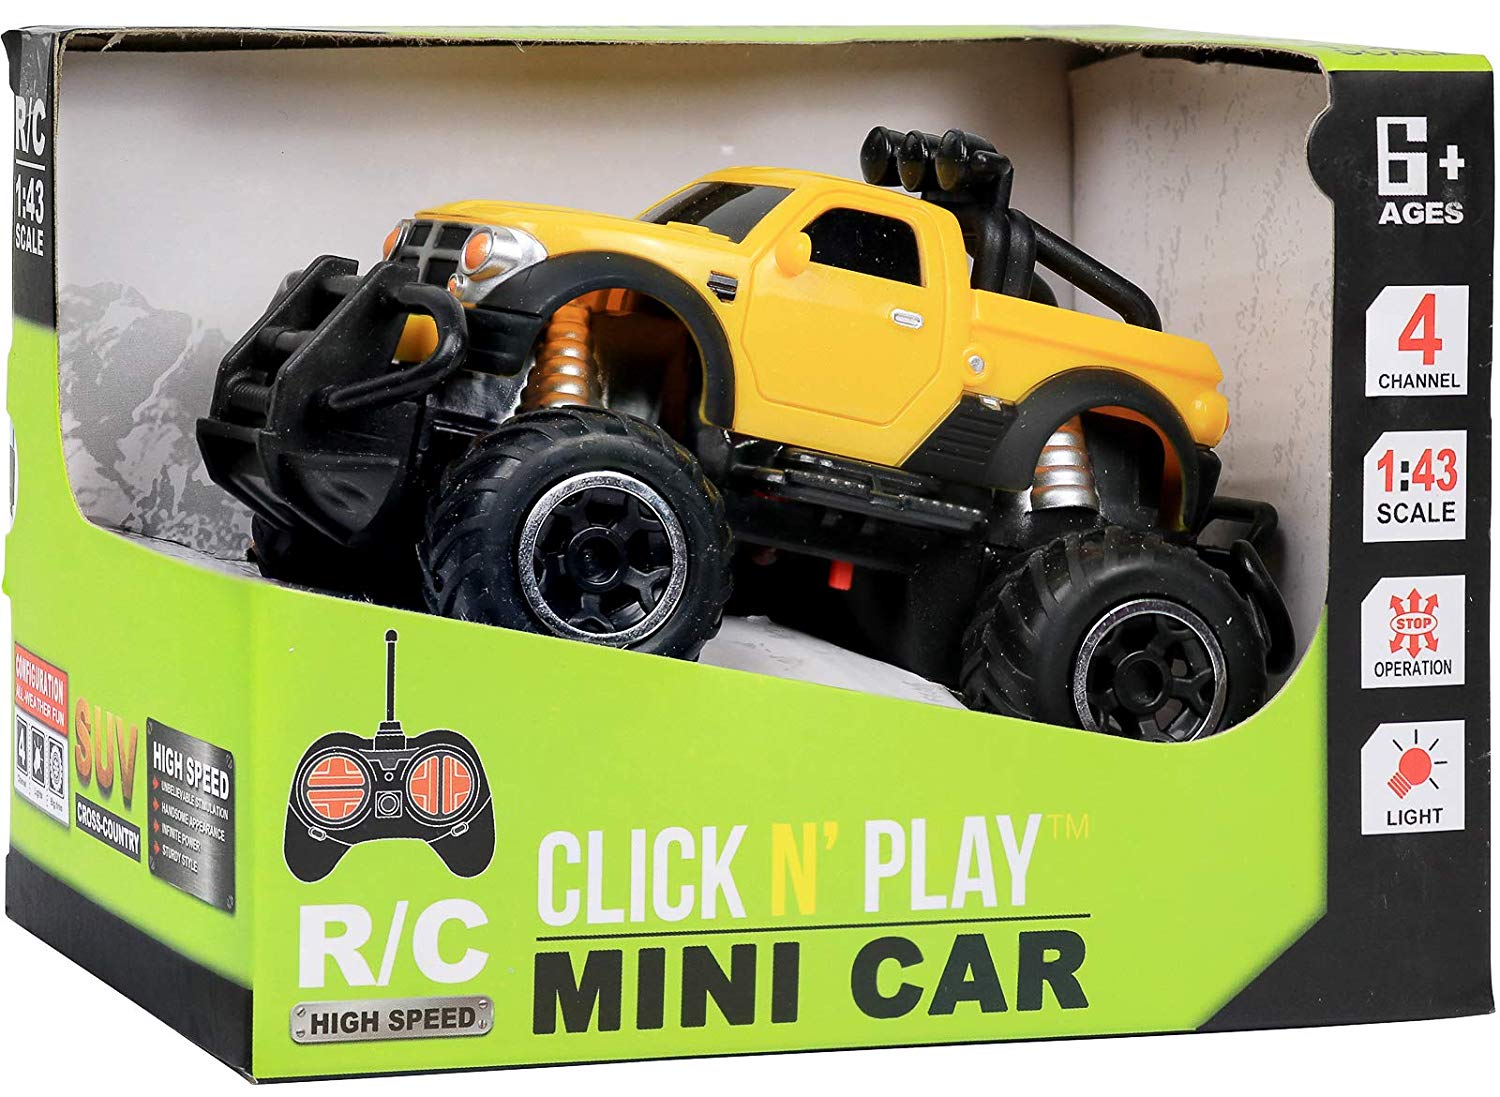 Click N' Play RC Remote Control Car, Mini Pickup Truck, Rock Crawler Radio Control Vehicle. - image 2 of 5